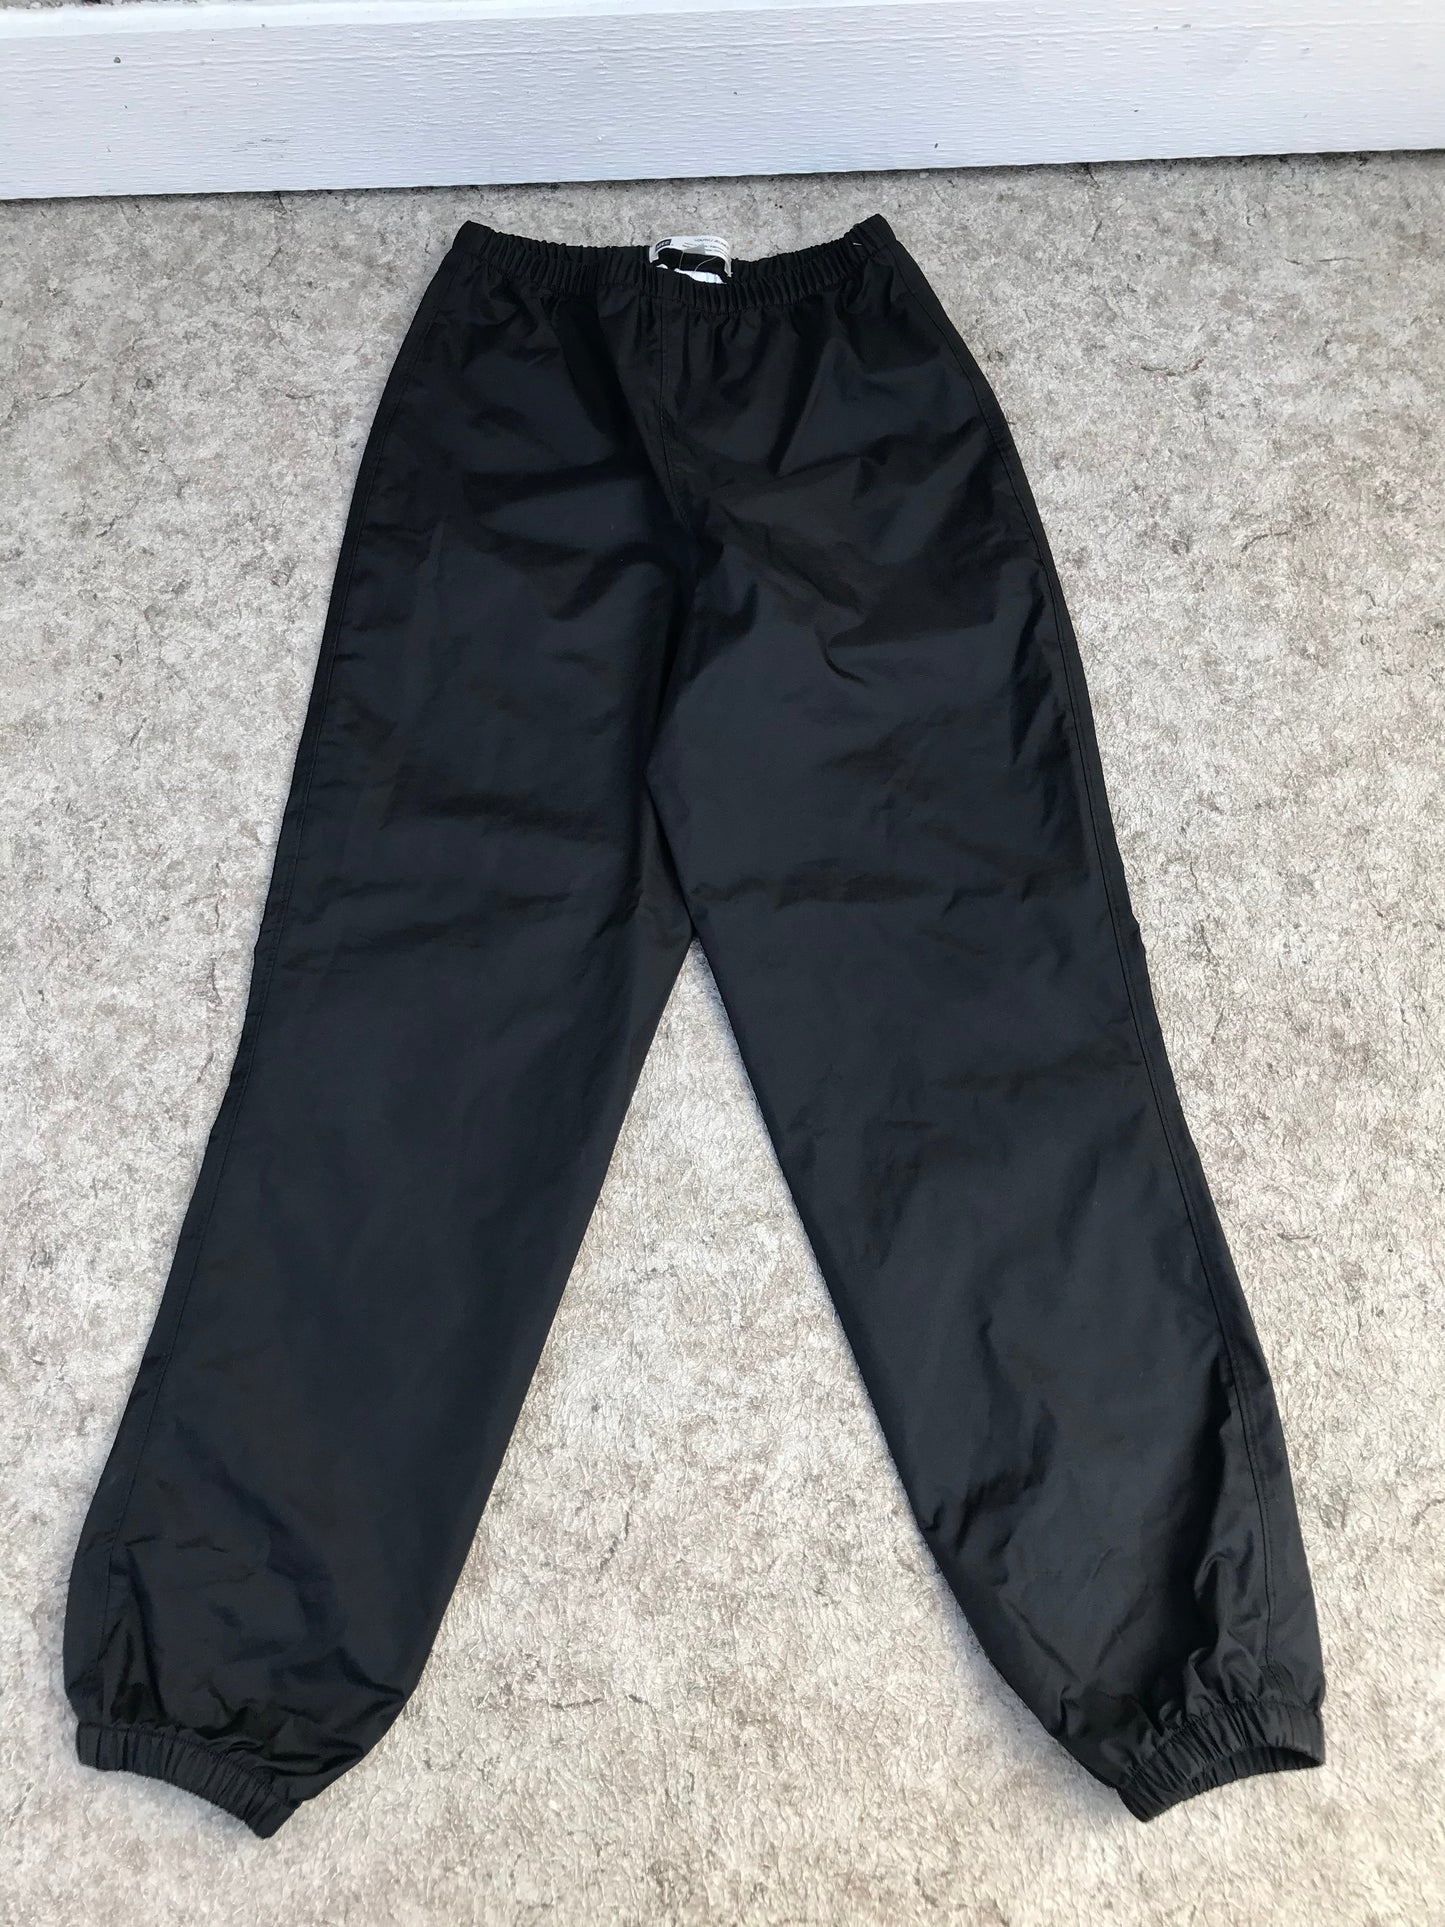 Rain Pants Child Size 16 MEC Waterproof Black New Demo Model